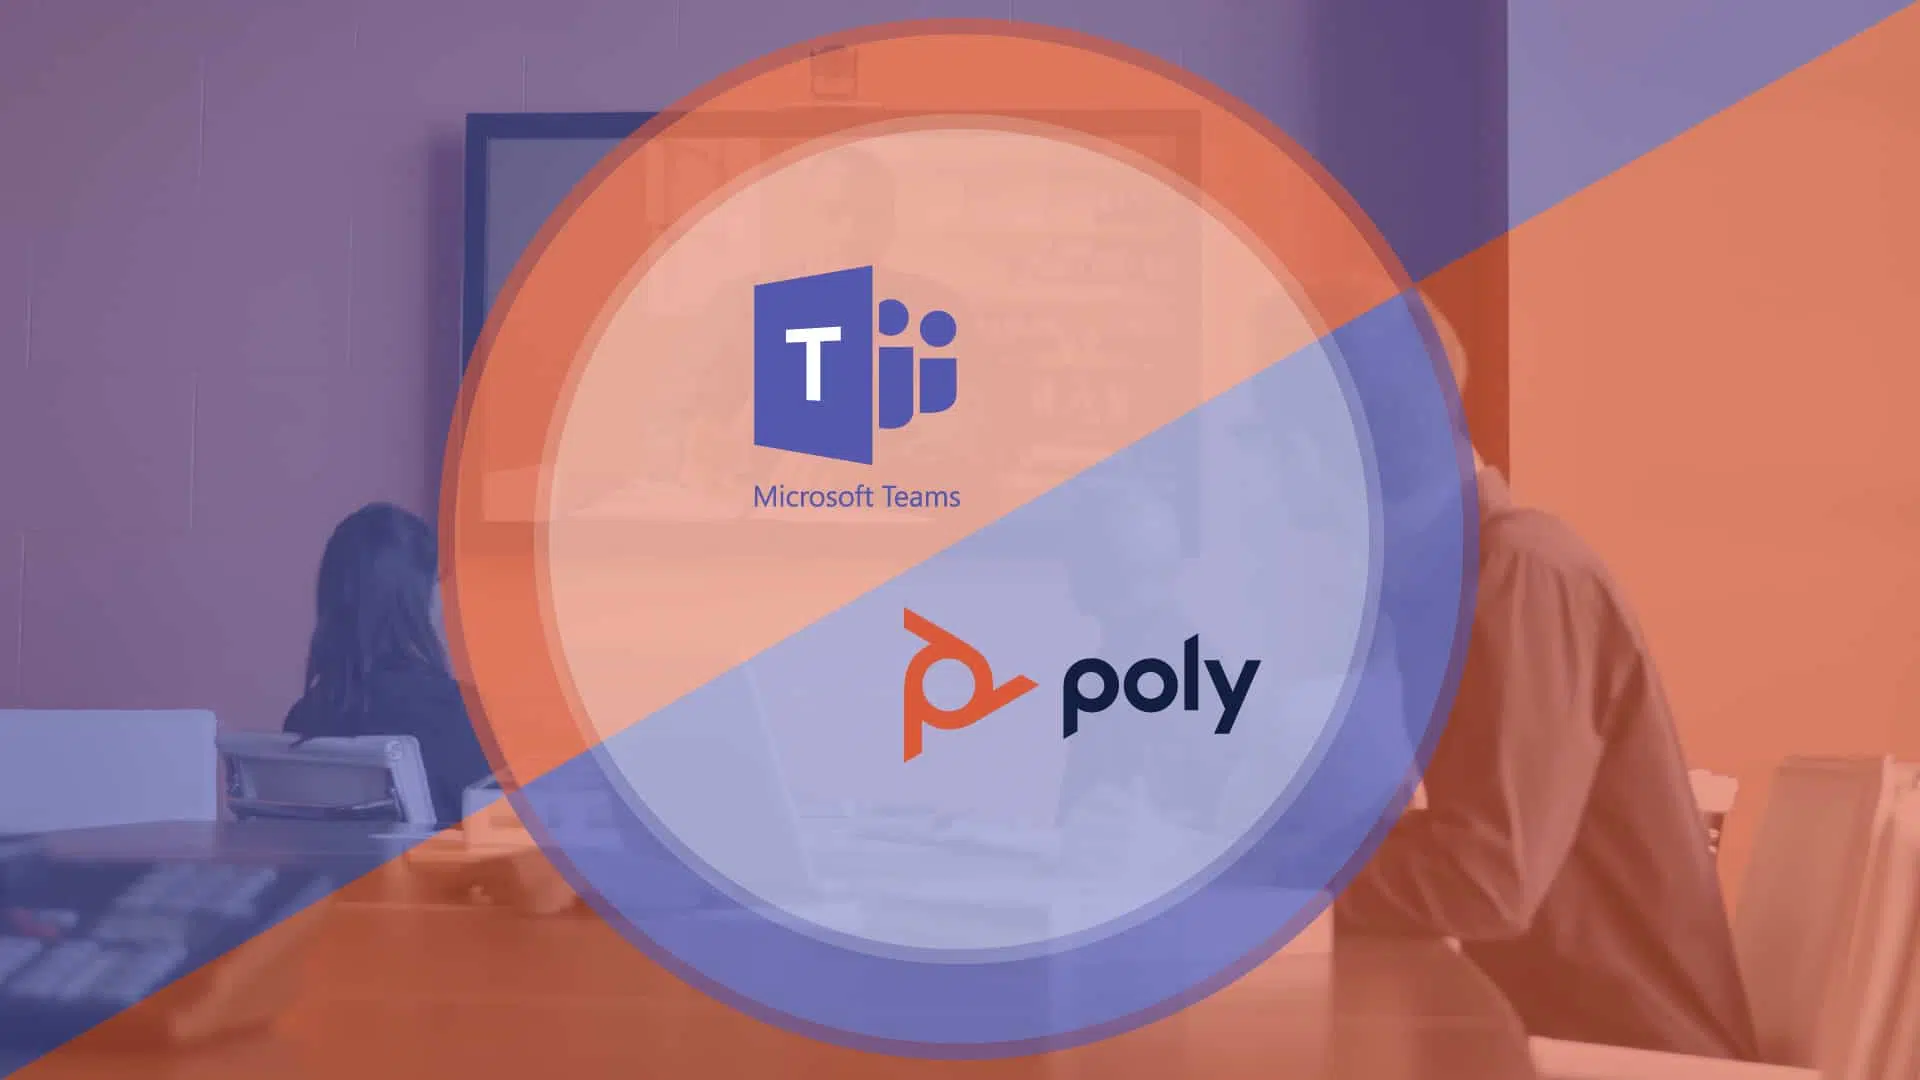 Microsoft Teams & Poly